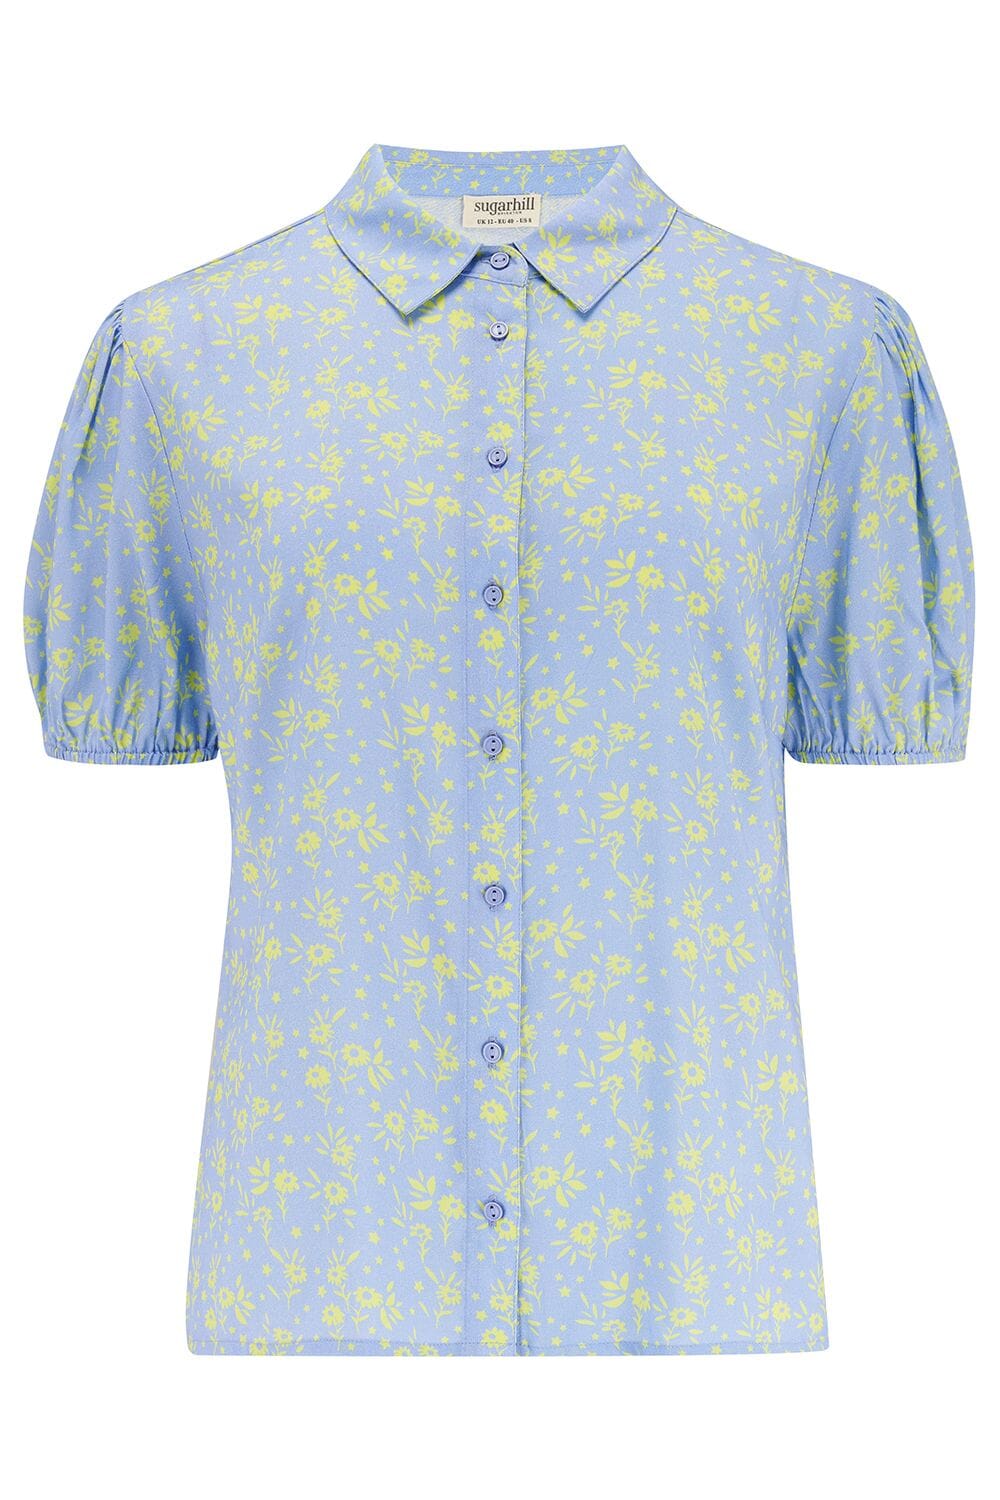 Sugarhill Romana Shirt Star Meadow Blue/Lemon - BouChic 